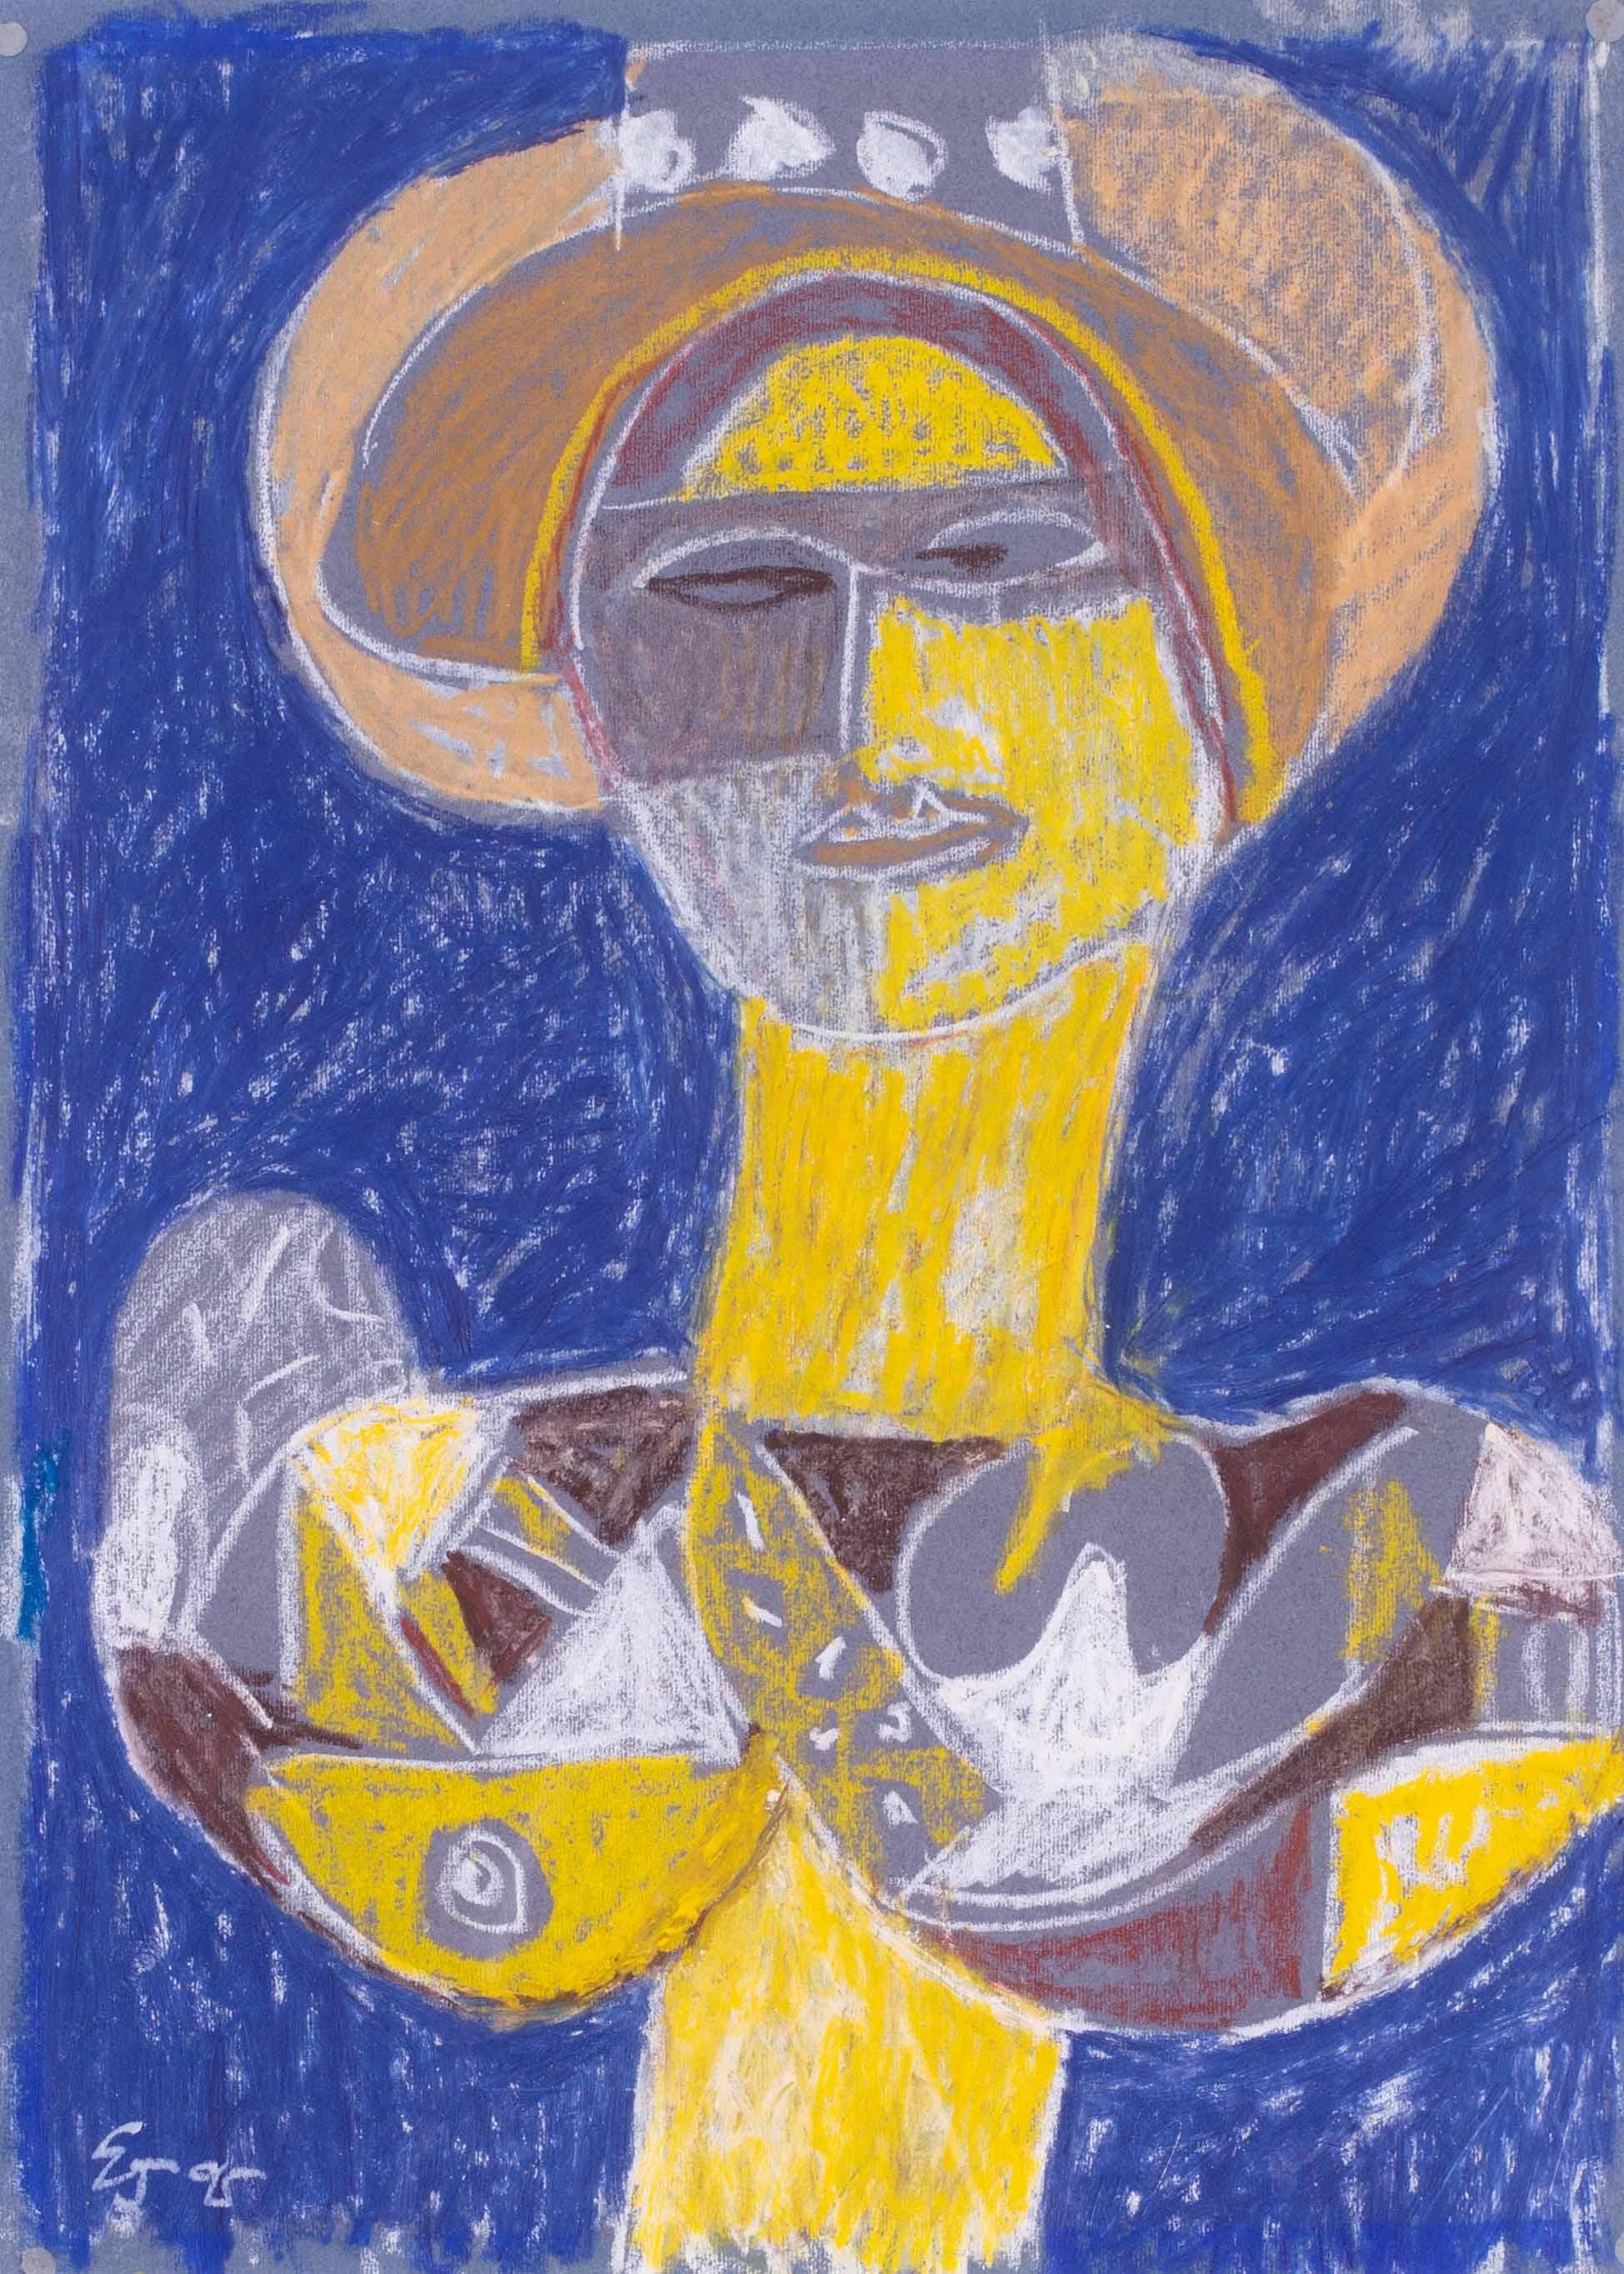 Femme abstraite en bleu et jaune par l'artiste Modern British 20th C, Ewart Johns. en vente 1